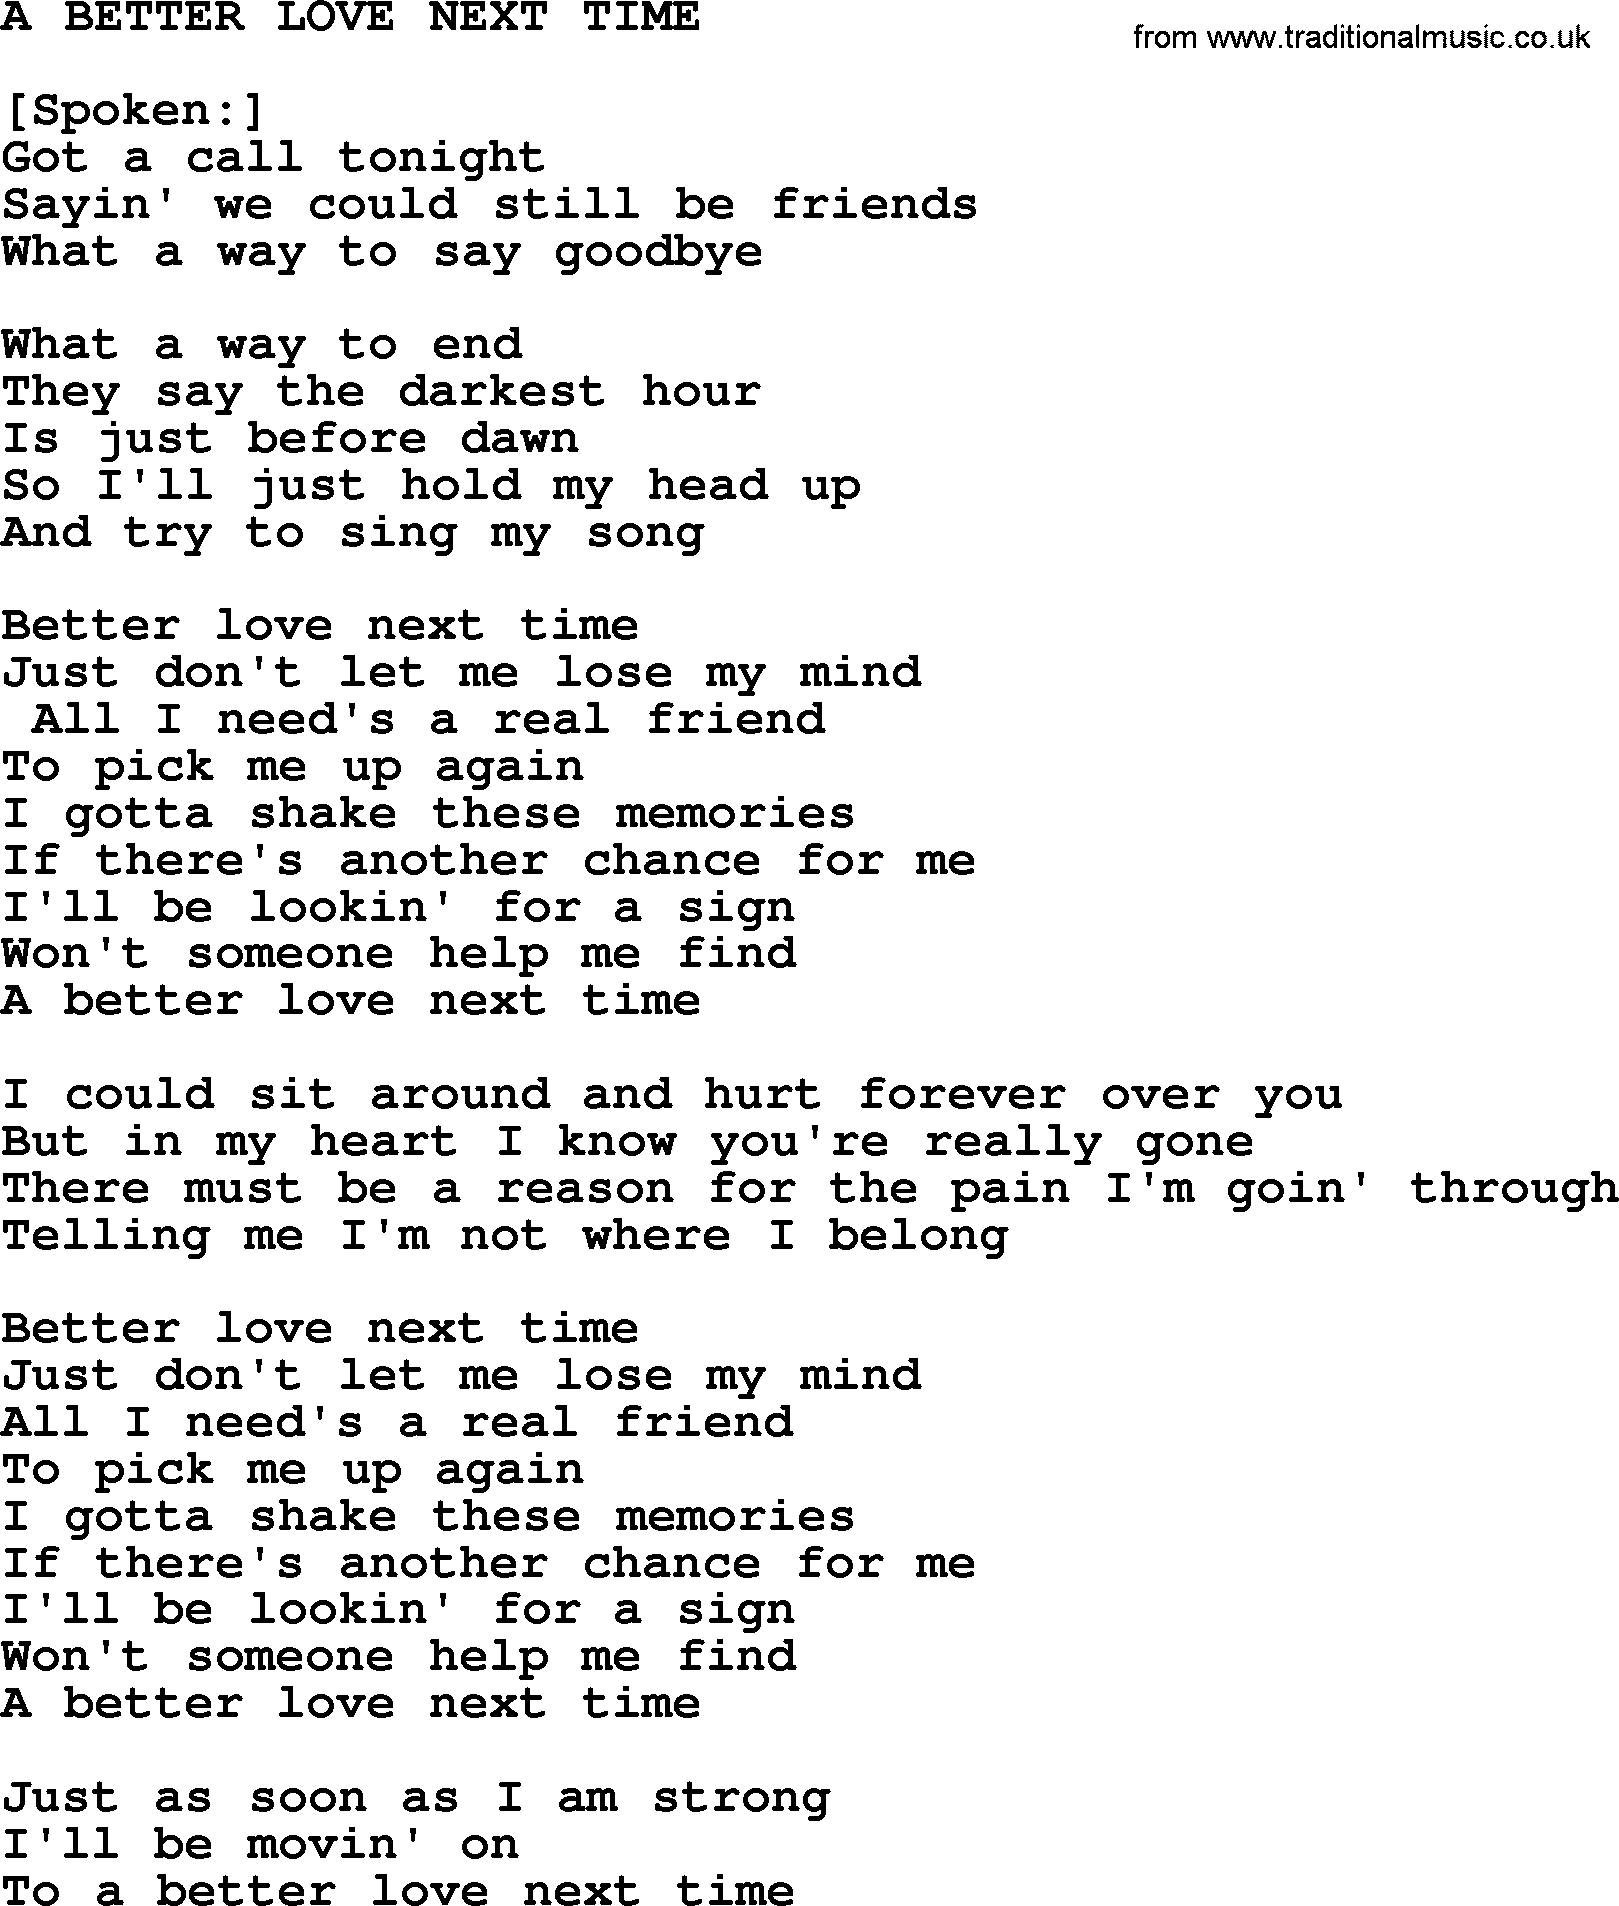 Merle Haggard song: A Better Love Next Time, lyrics.